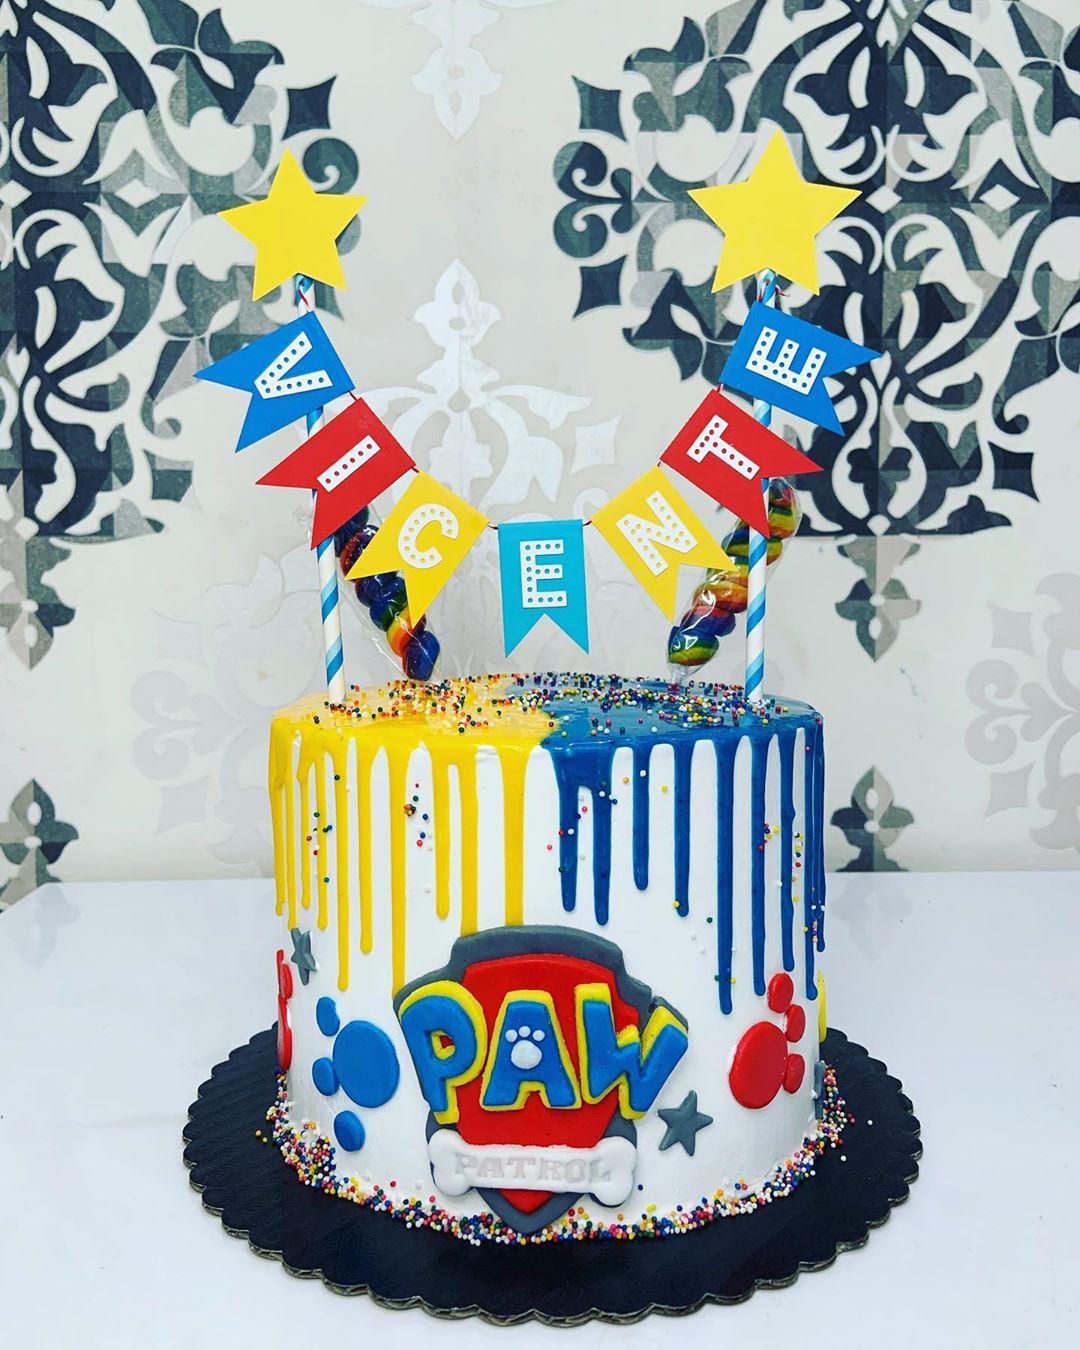 Paw Patrol Birthday Cake